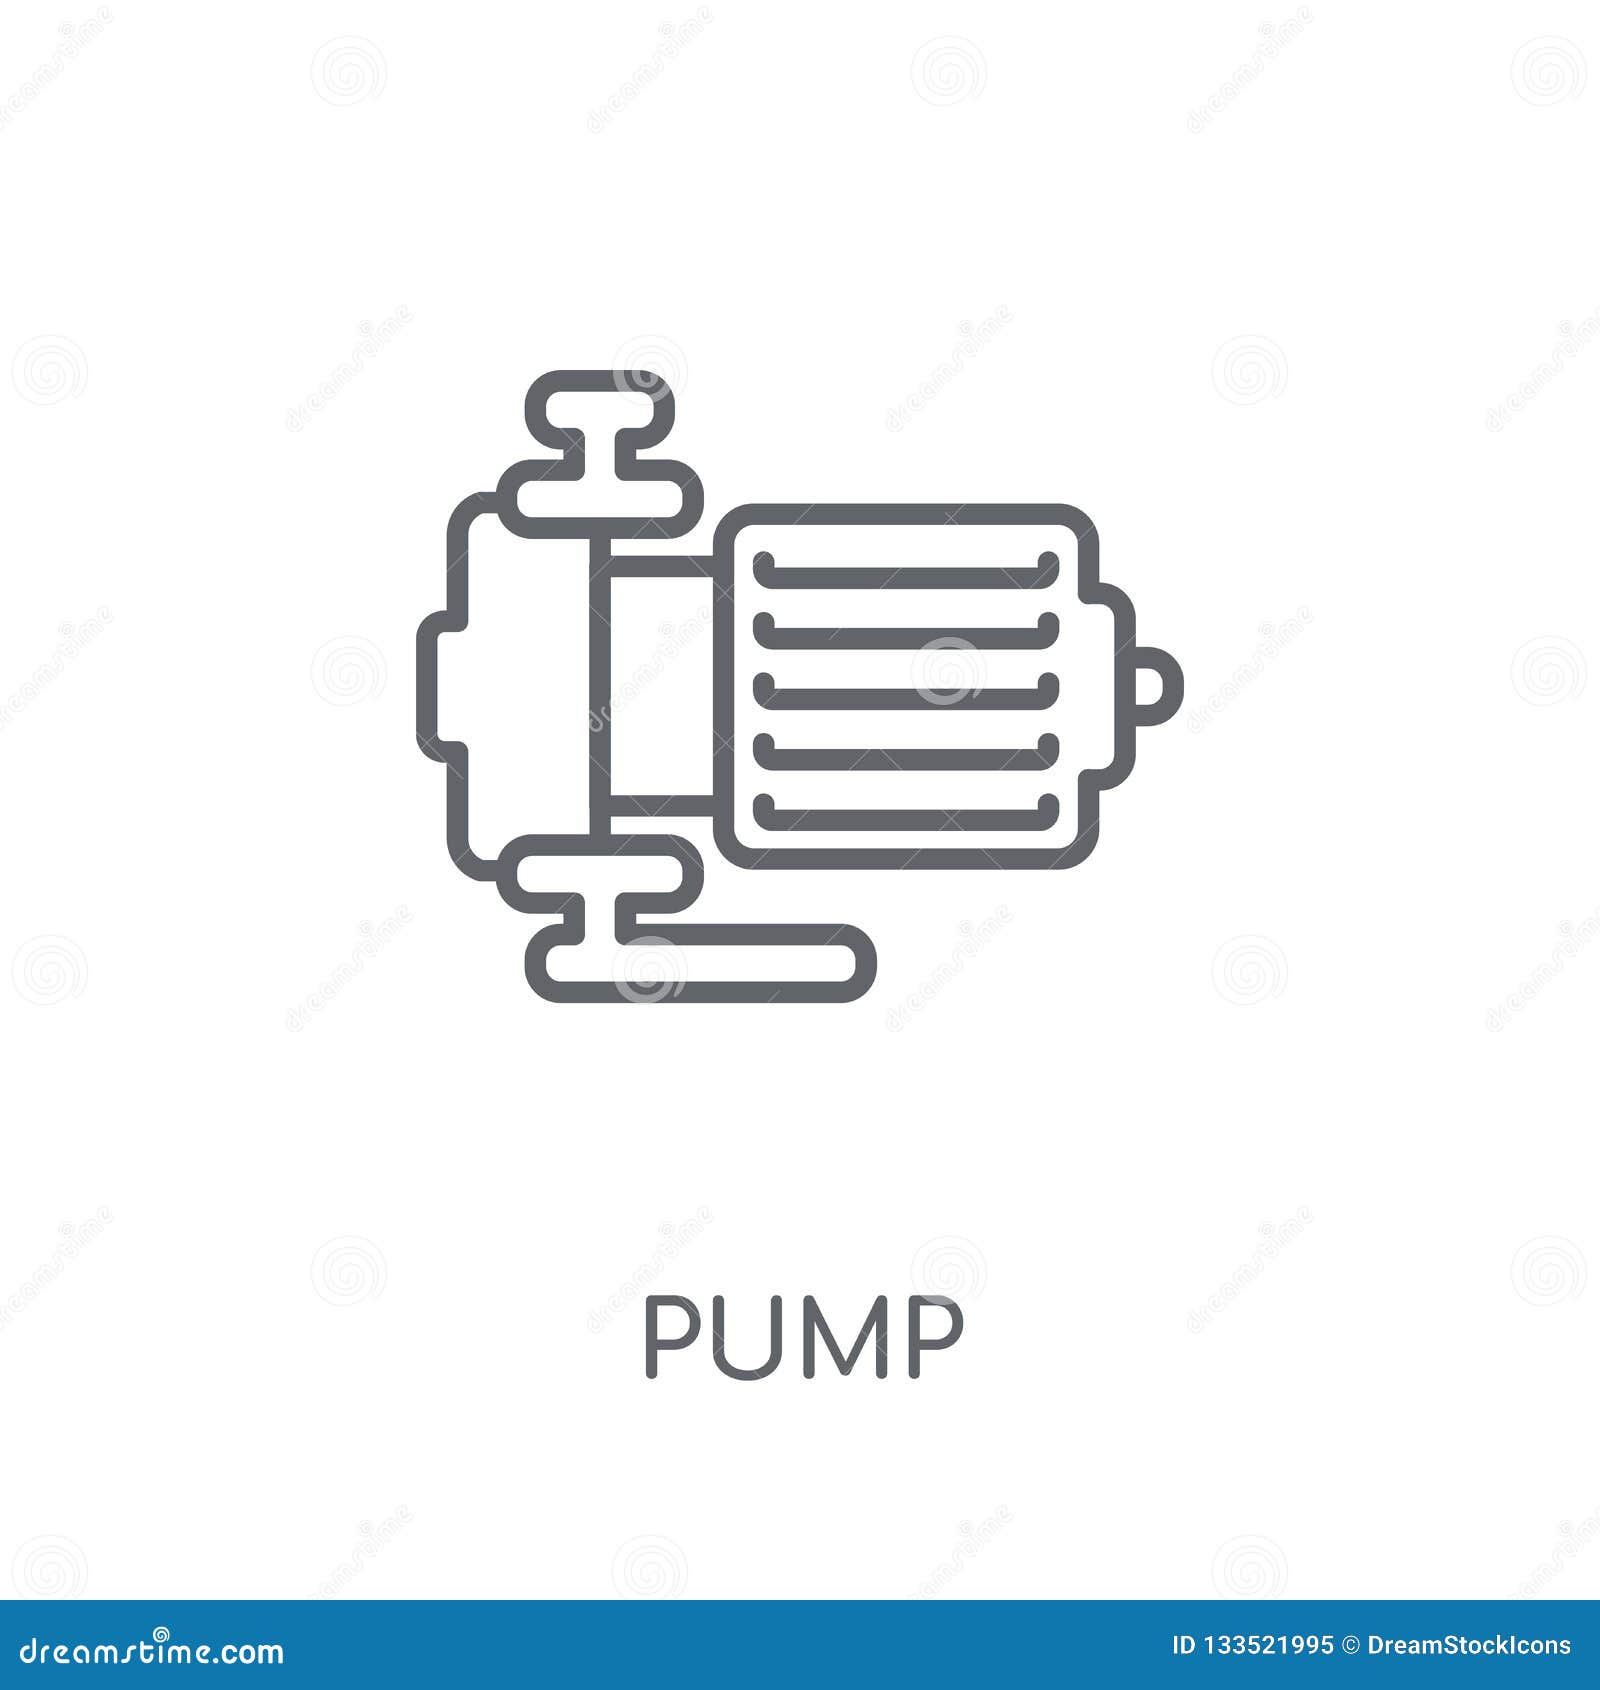 Share 139+ pump logo latest - camera.edu.vn